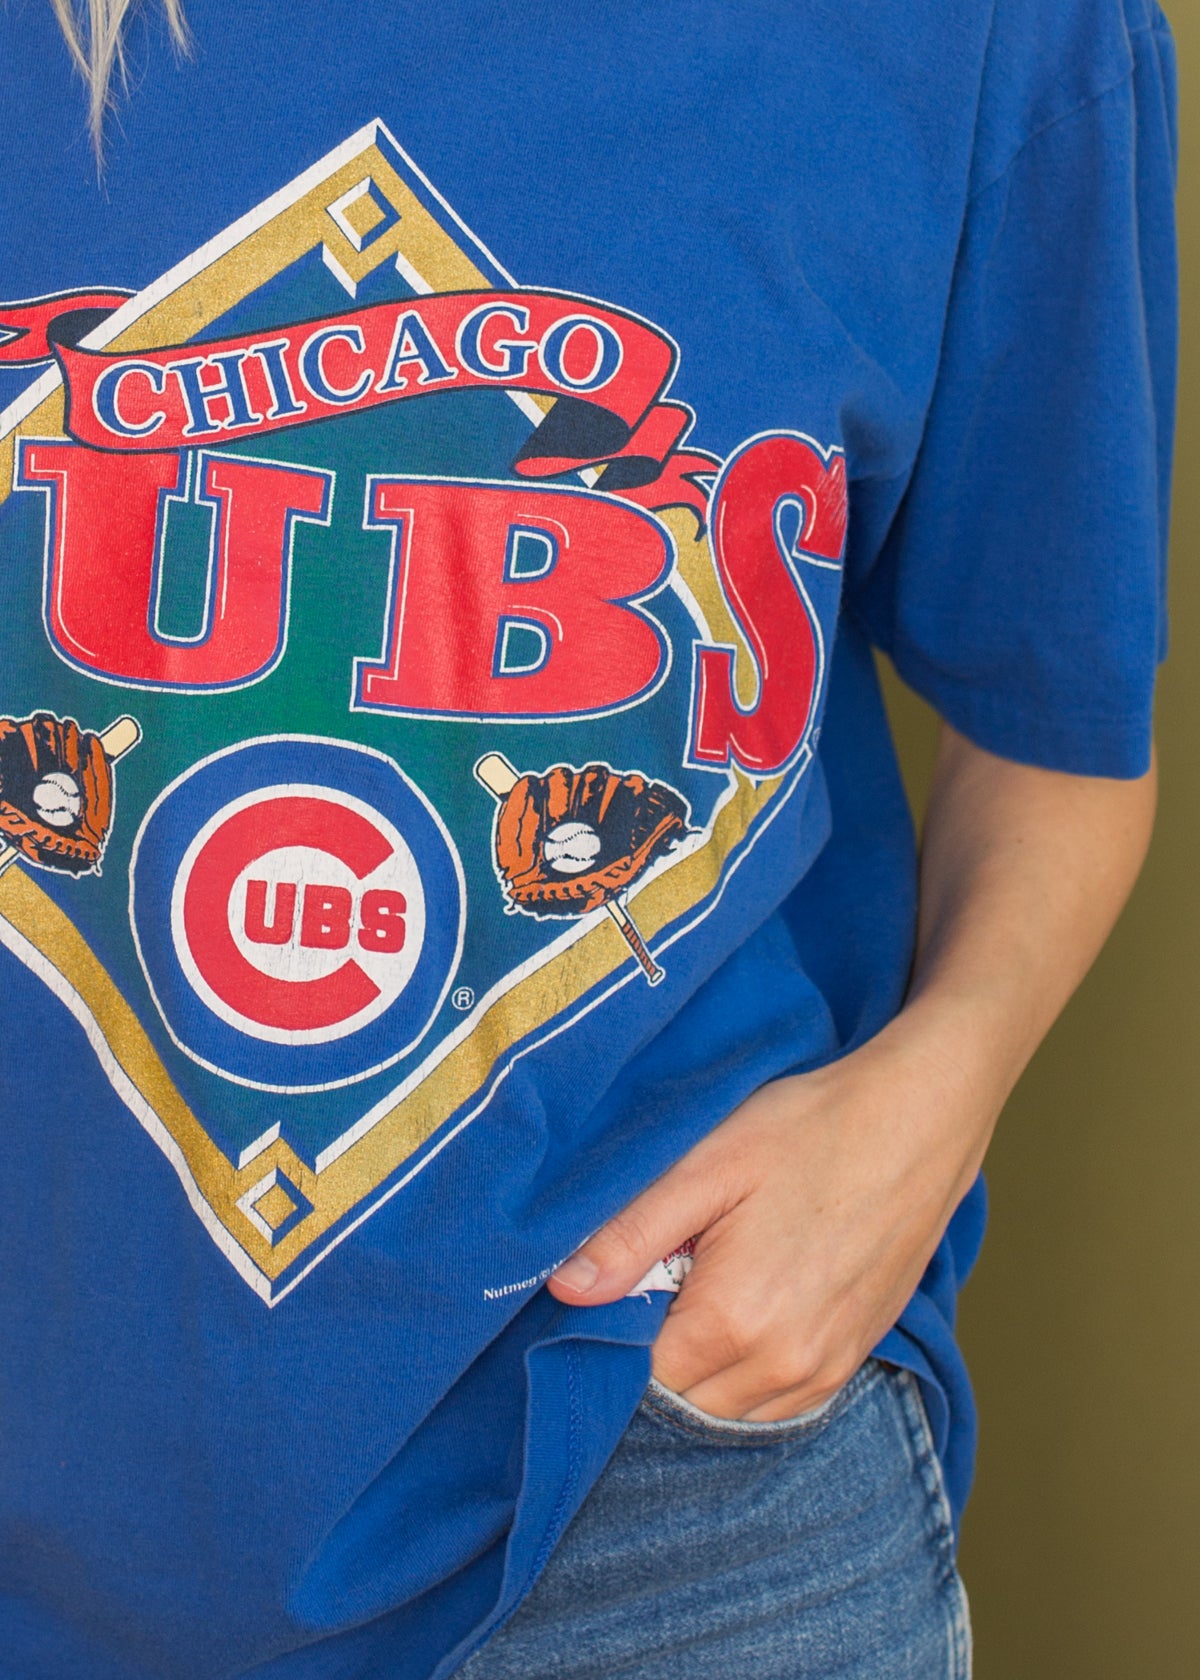 chicago cubs t shirts vintage